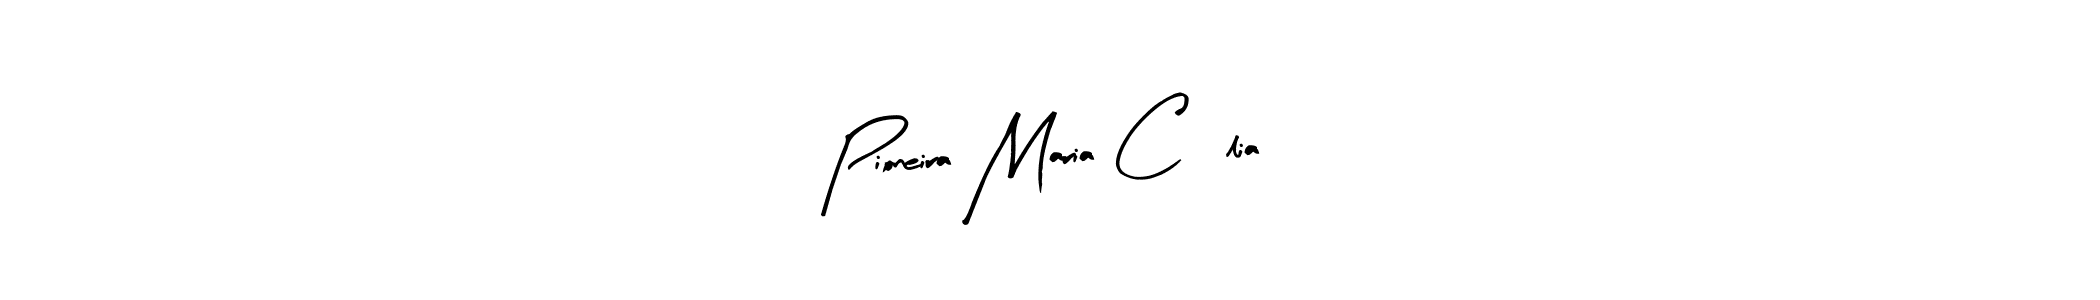 How to Draw Pioneira Maria Célia signature style? Arty Signature is a latest design signature styles for name Pioneira Maria Célia. Pioneira Maria Célia signature style 8 images and pictures png